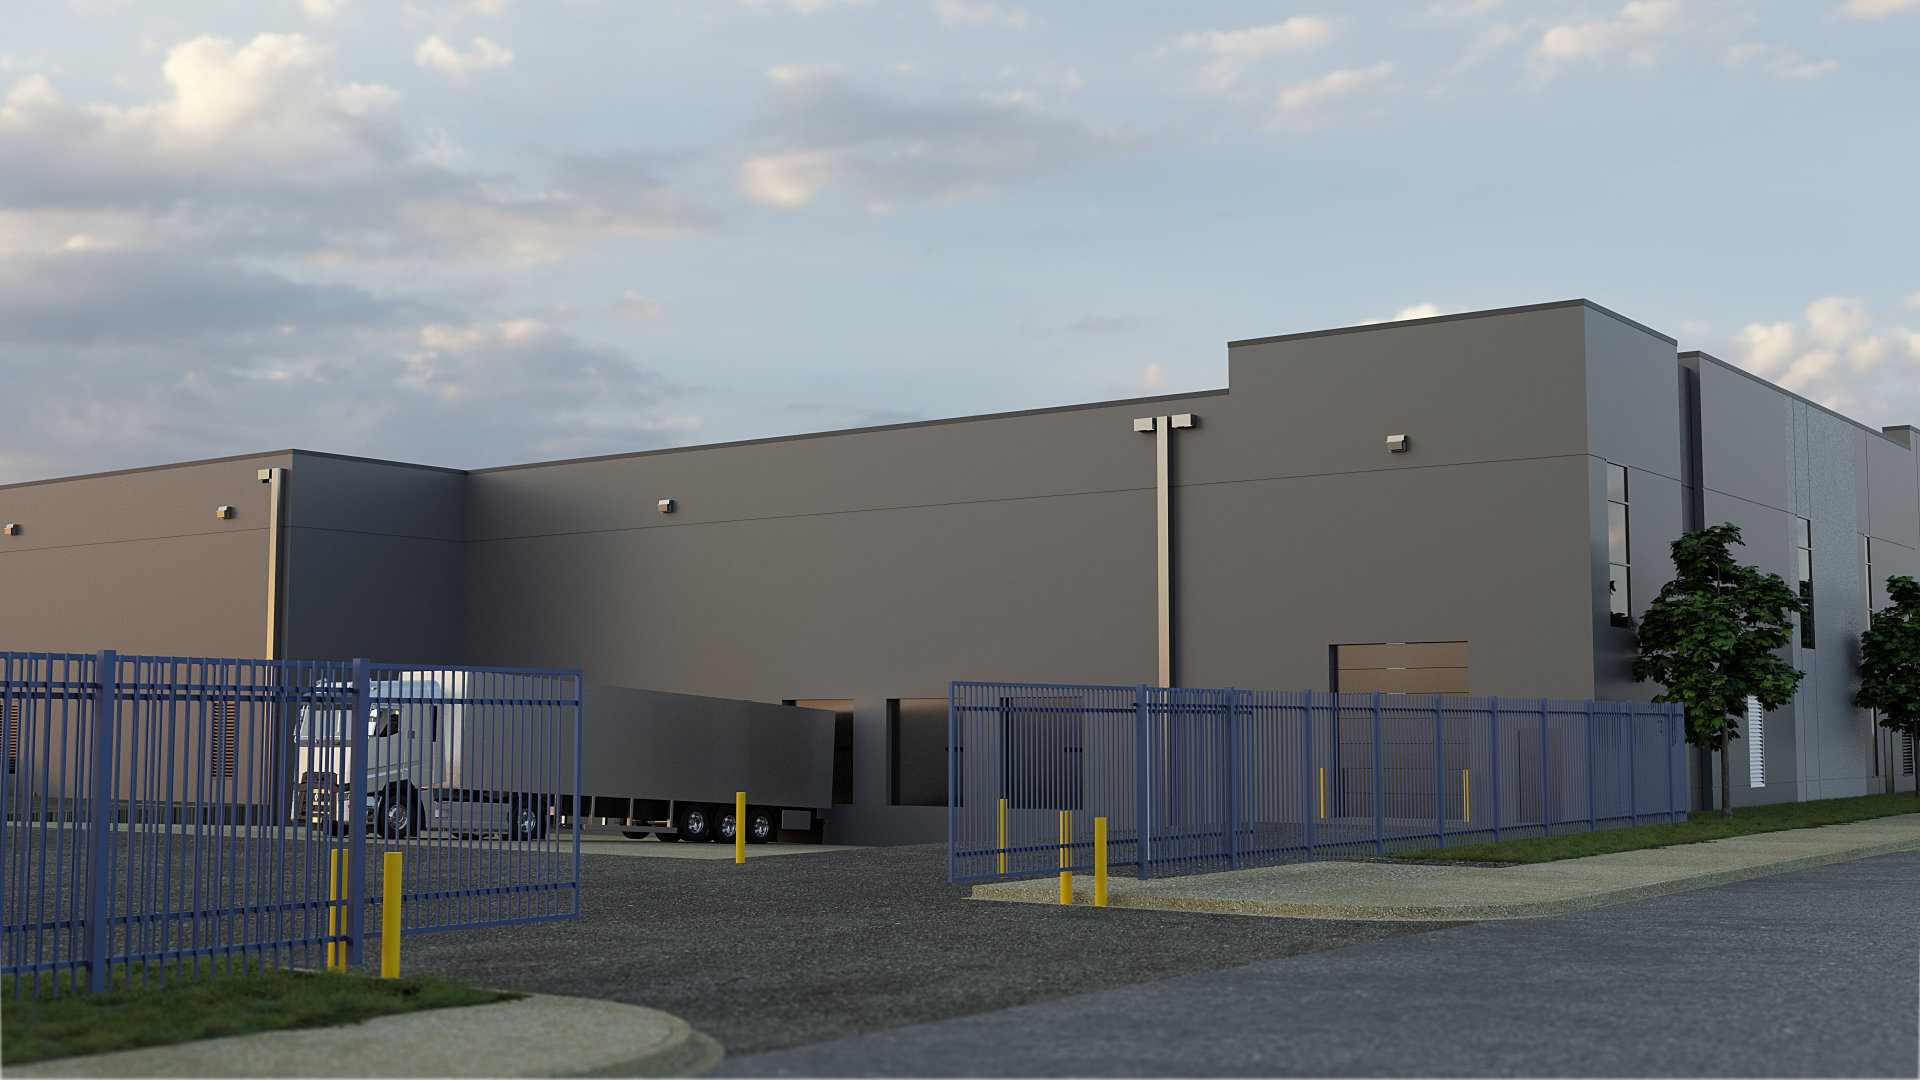 3d model rendering of warehouse back